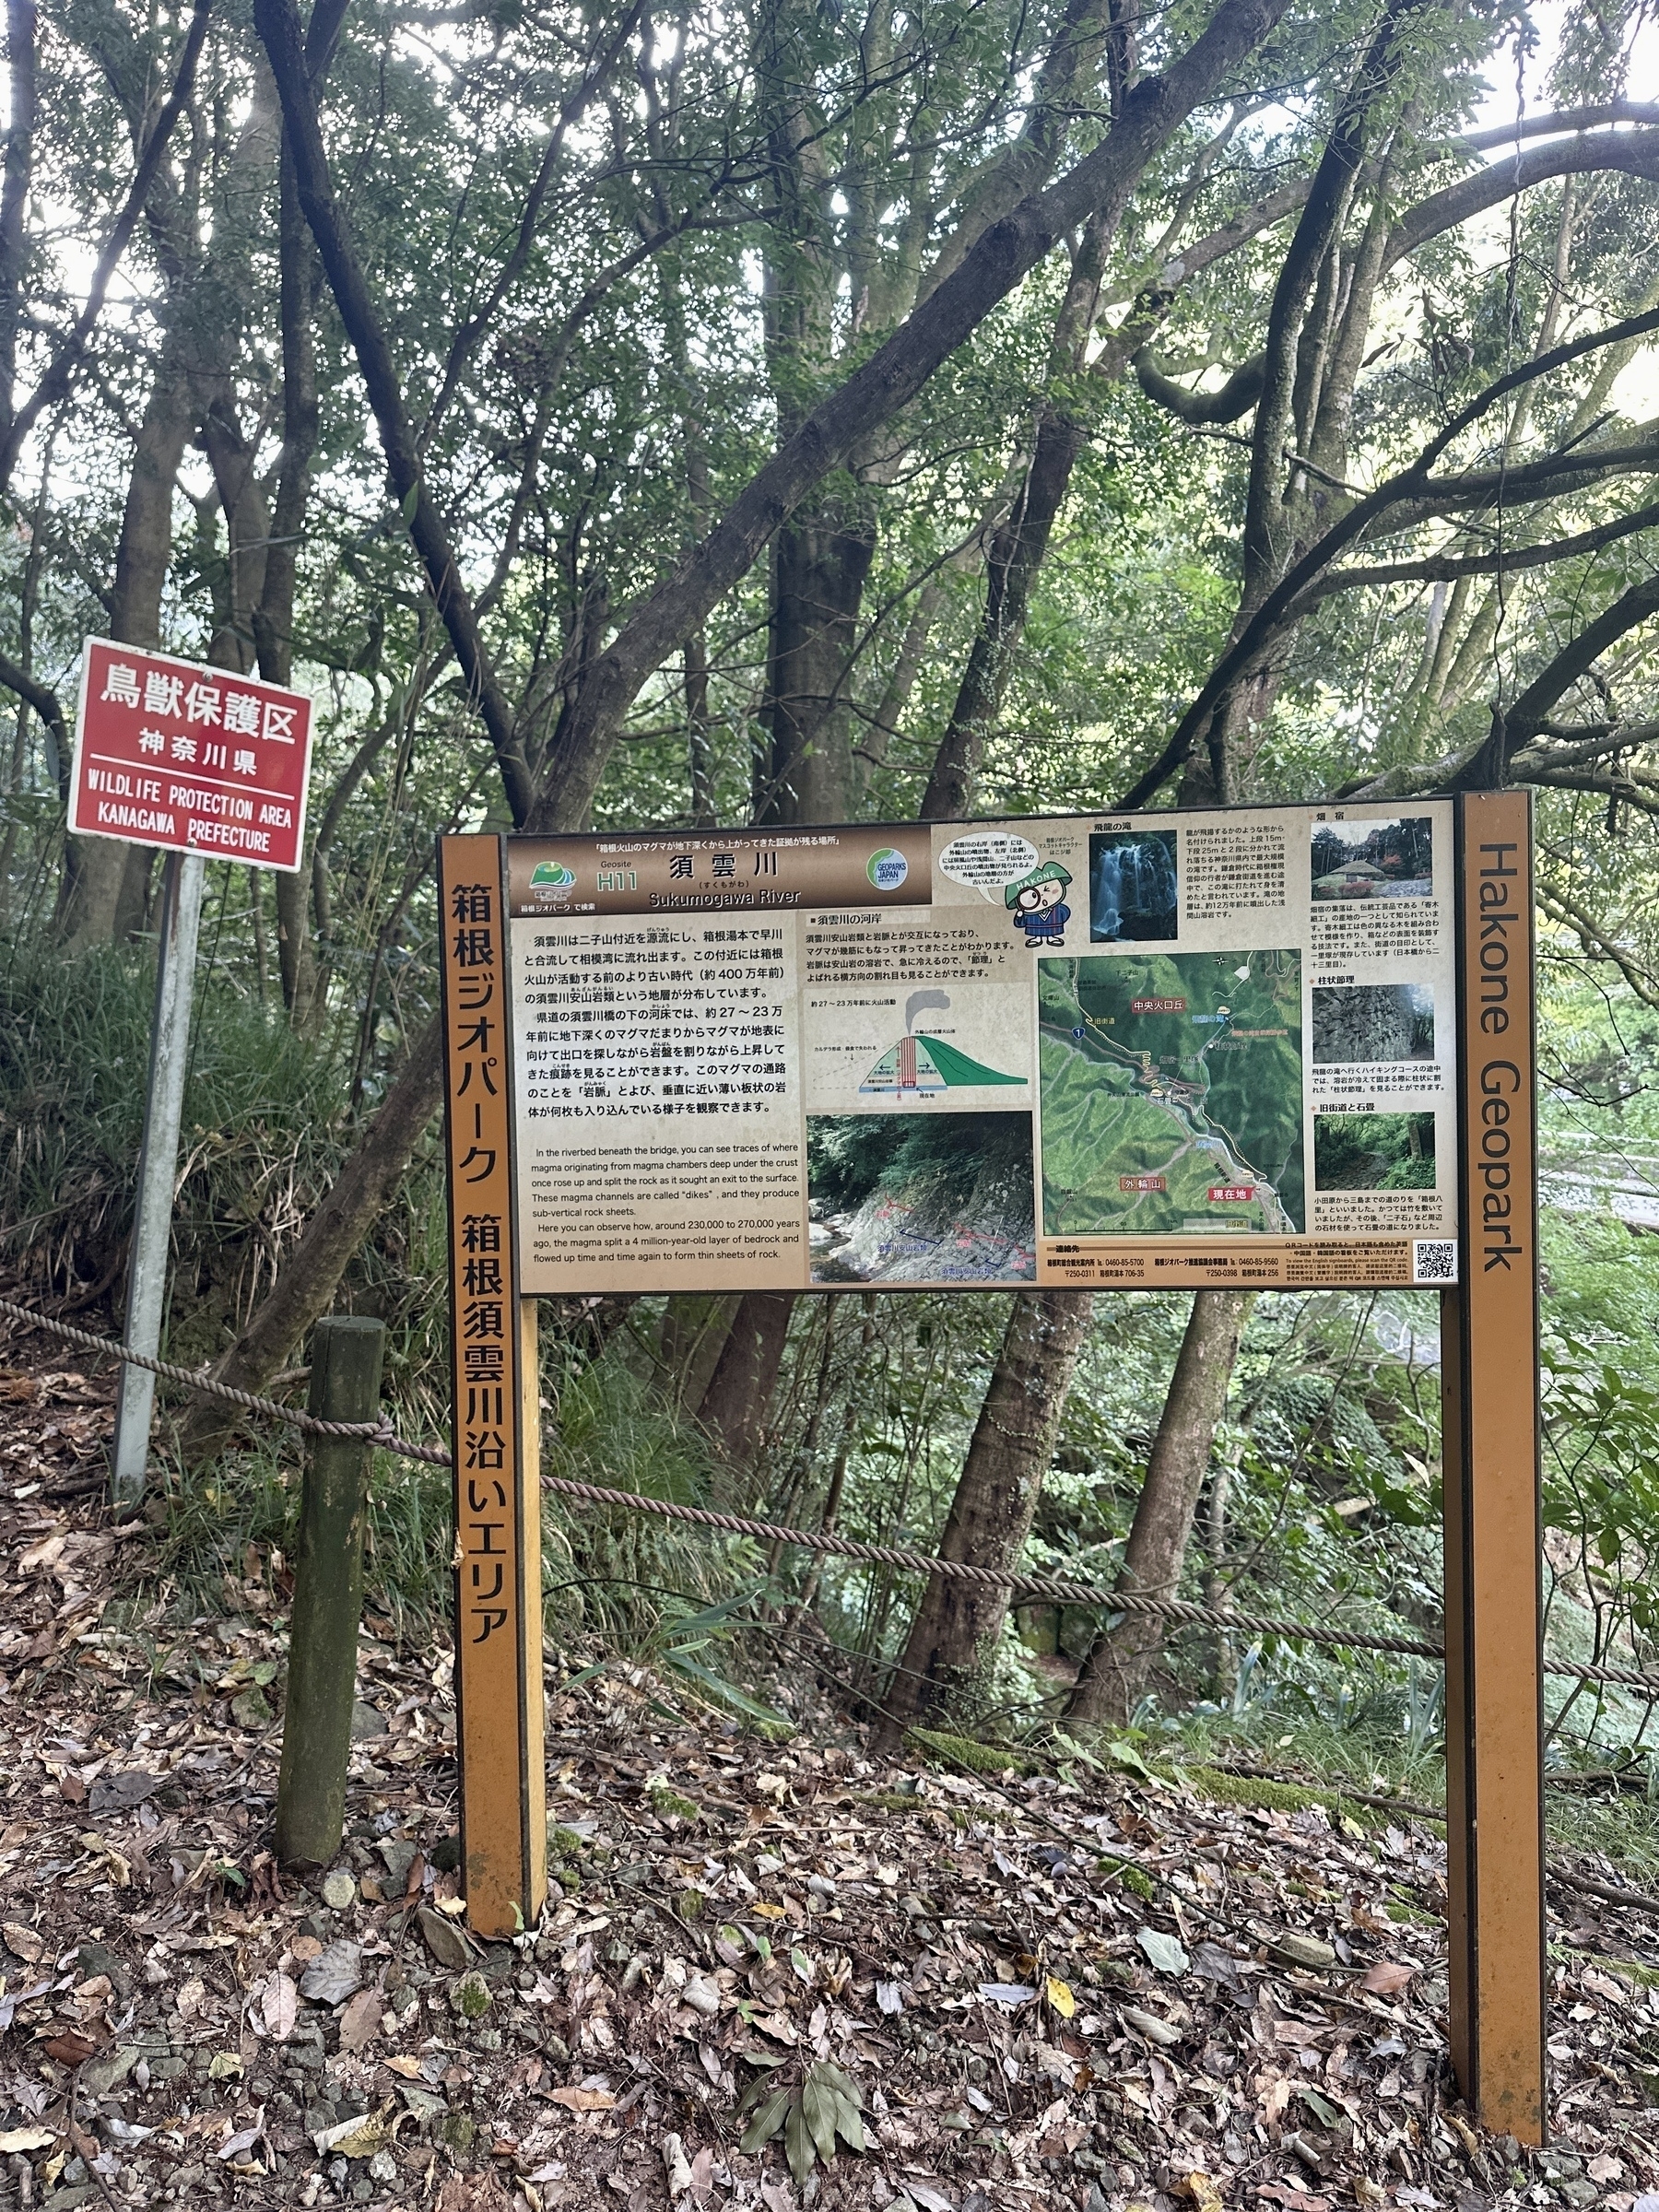 Trailhead marked by Hakone GeoPark sign